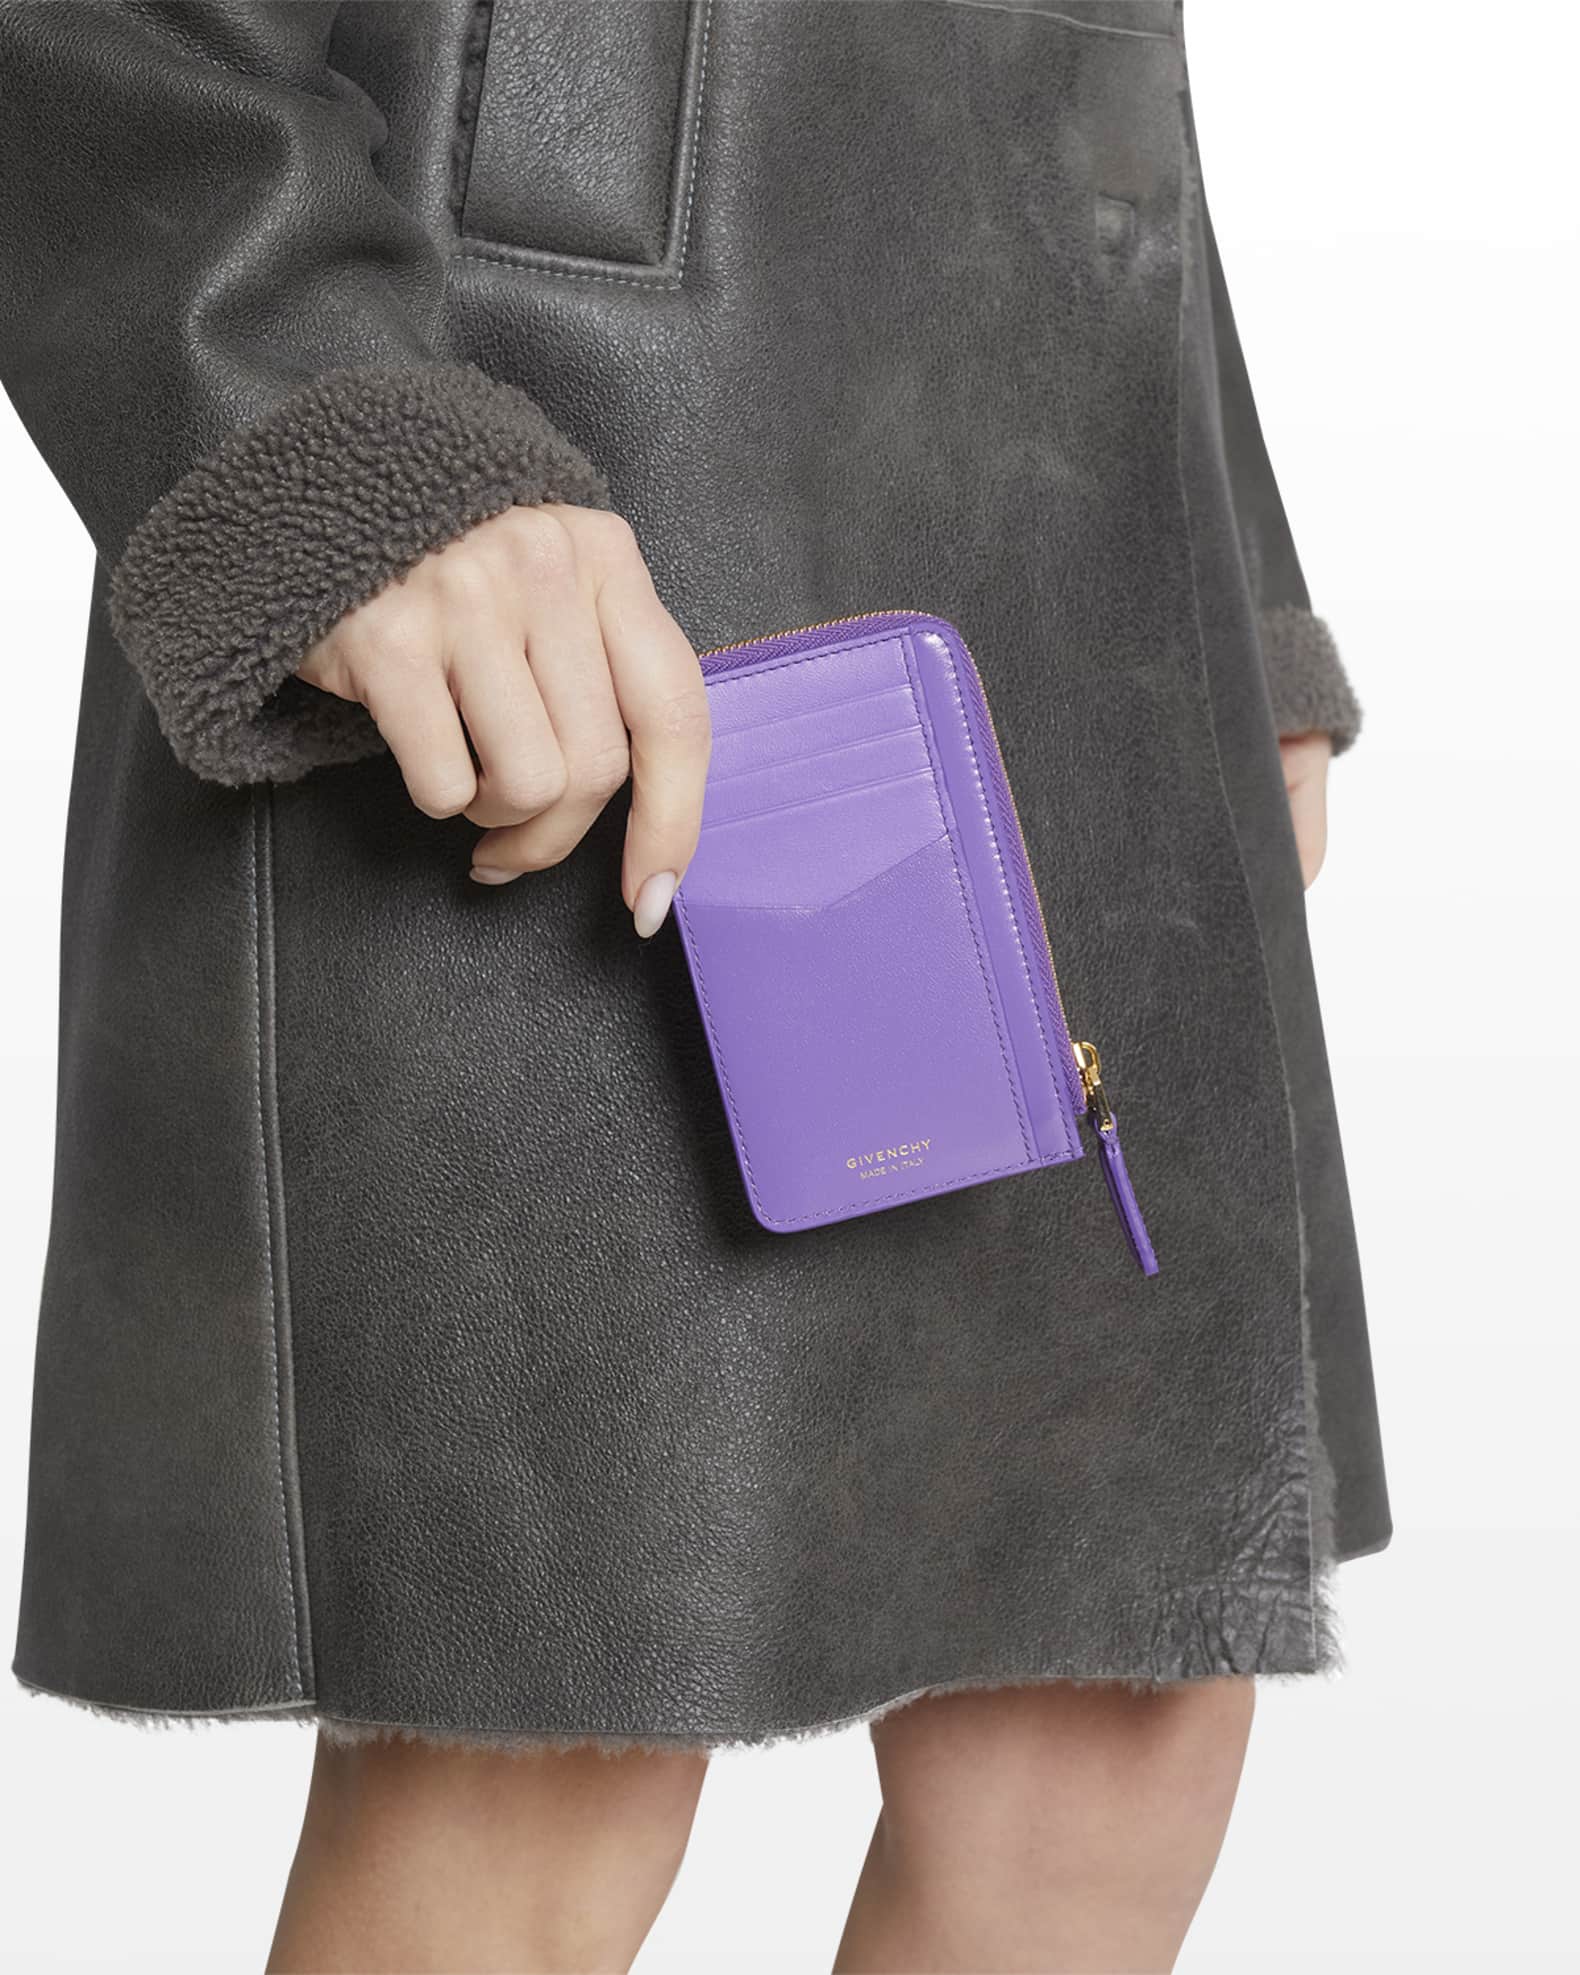 Givenchy Antigona Zip Card Holder in Calf Leather | Neiman Marcus